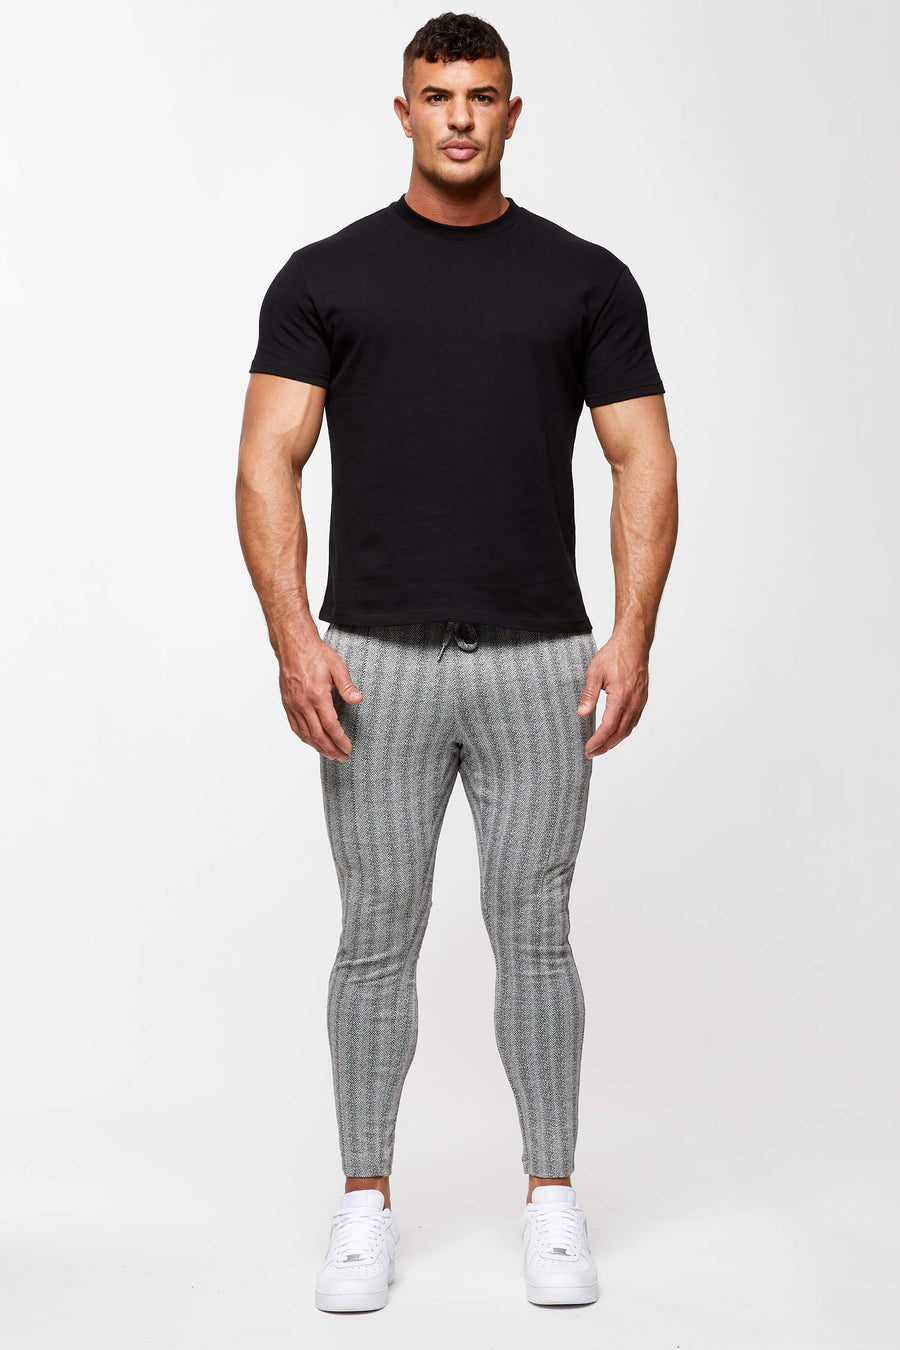 Legend London Trousers SMART JOGGER PANT - GREY